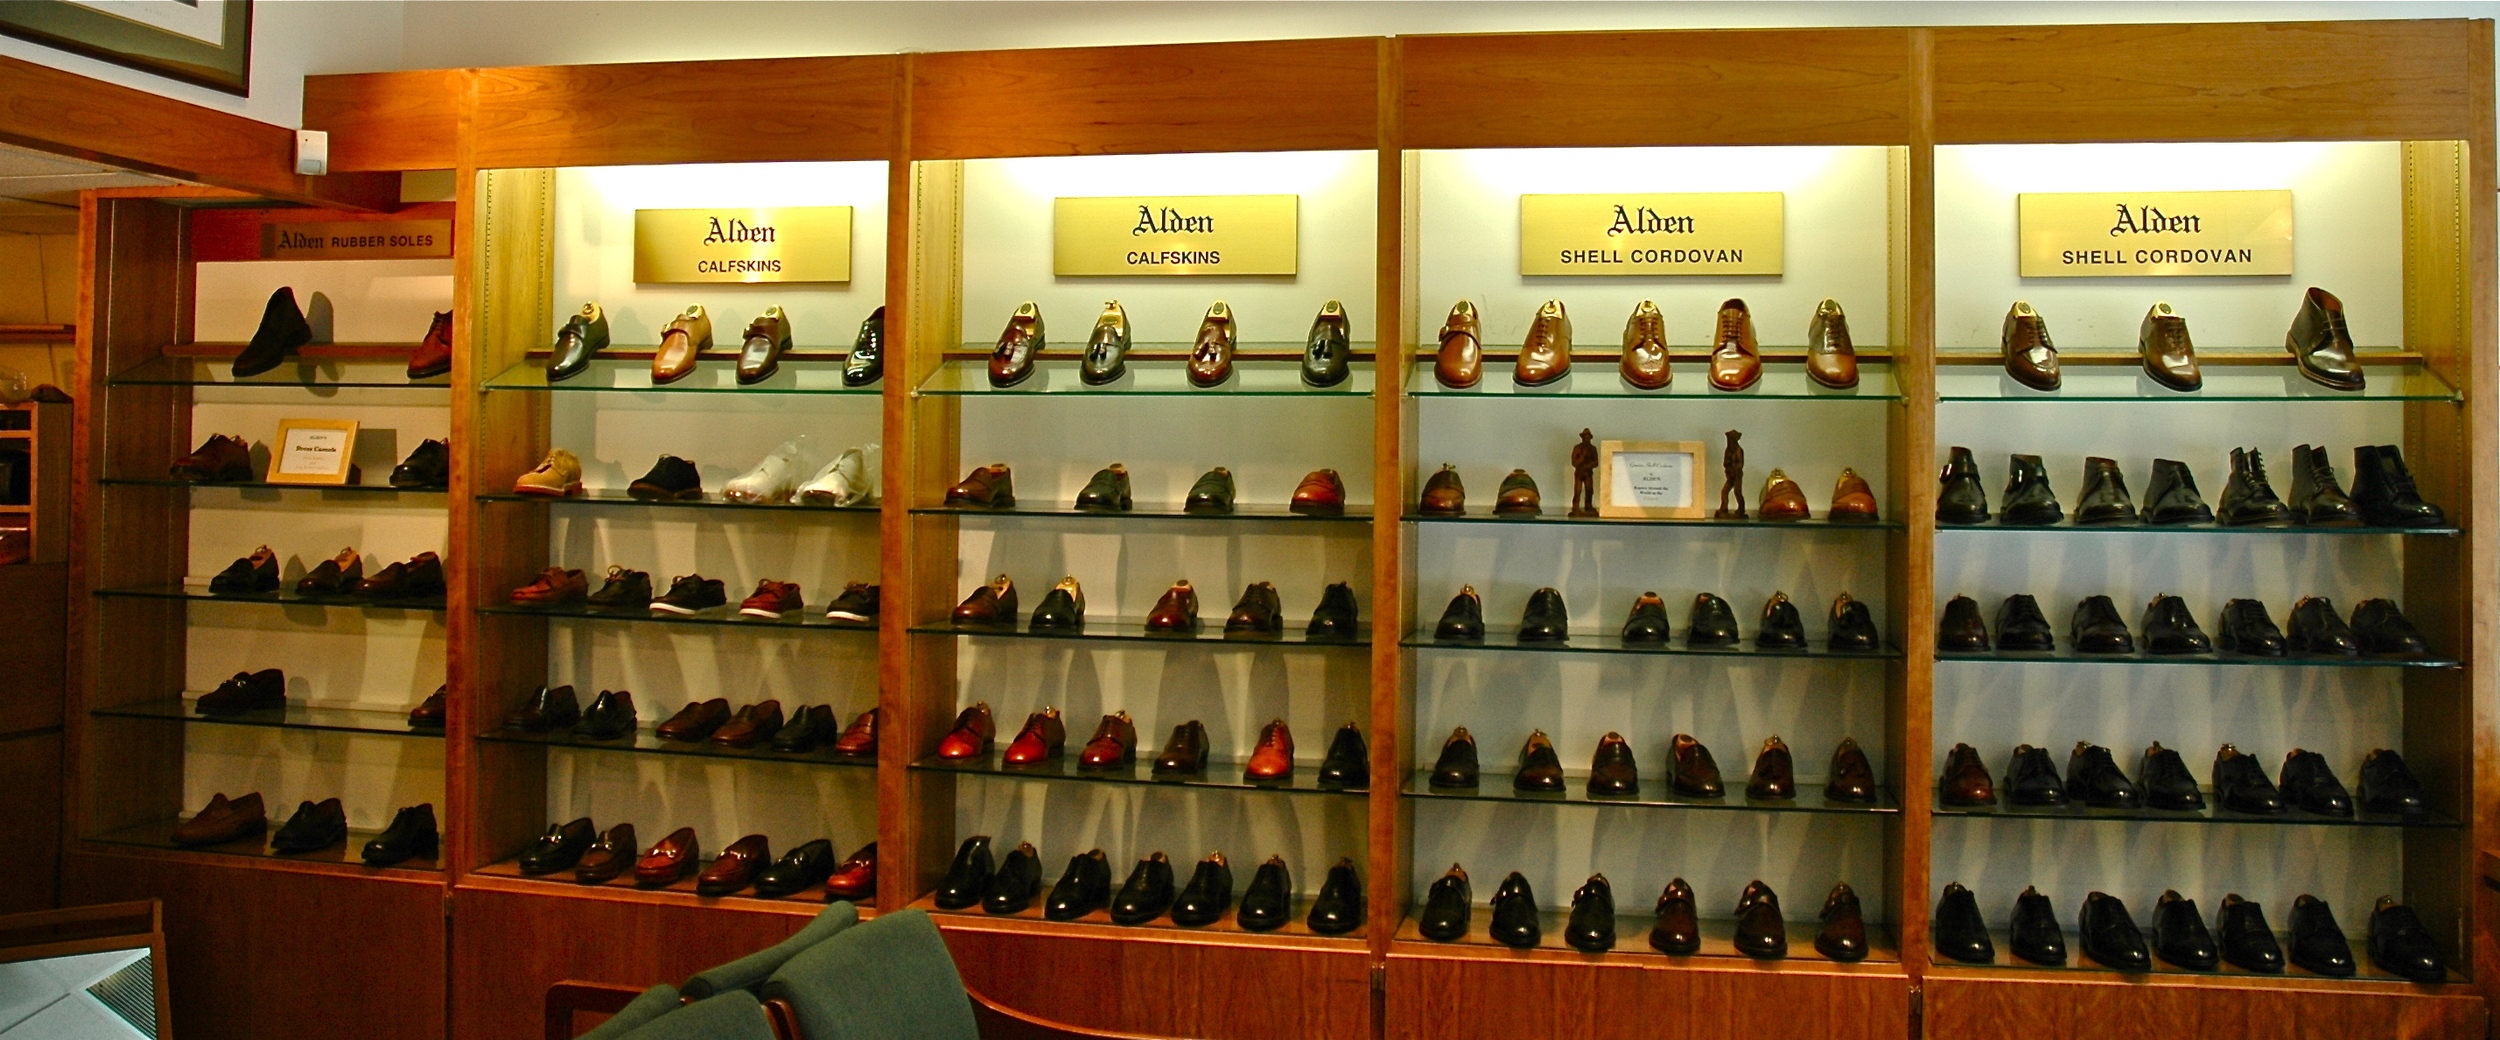 alden shoes outlet